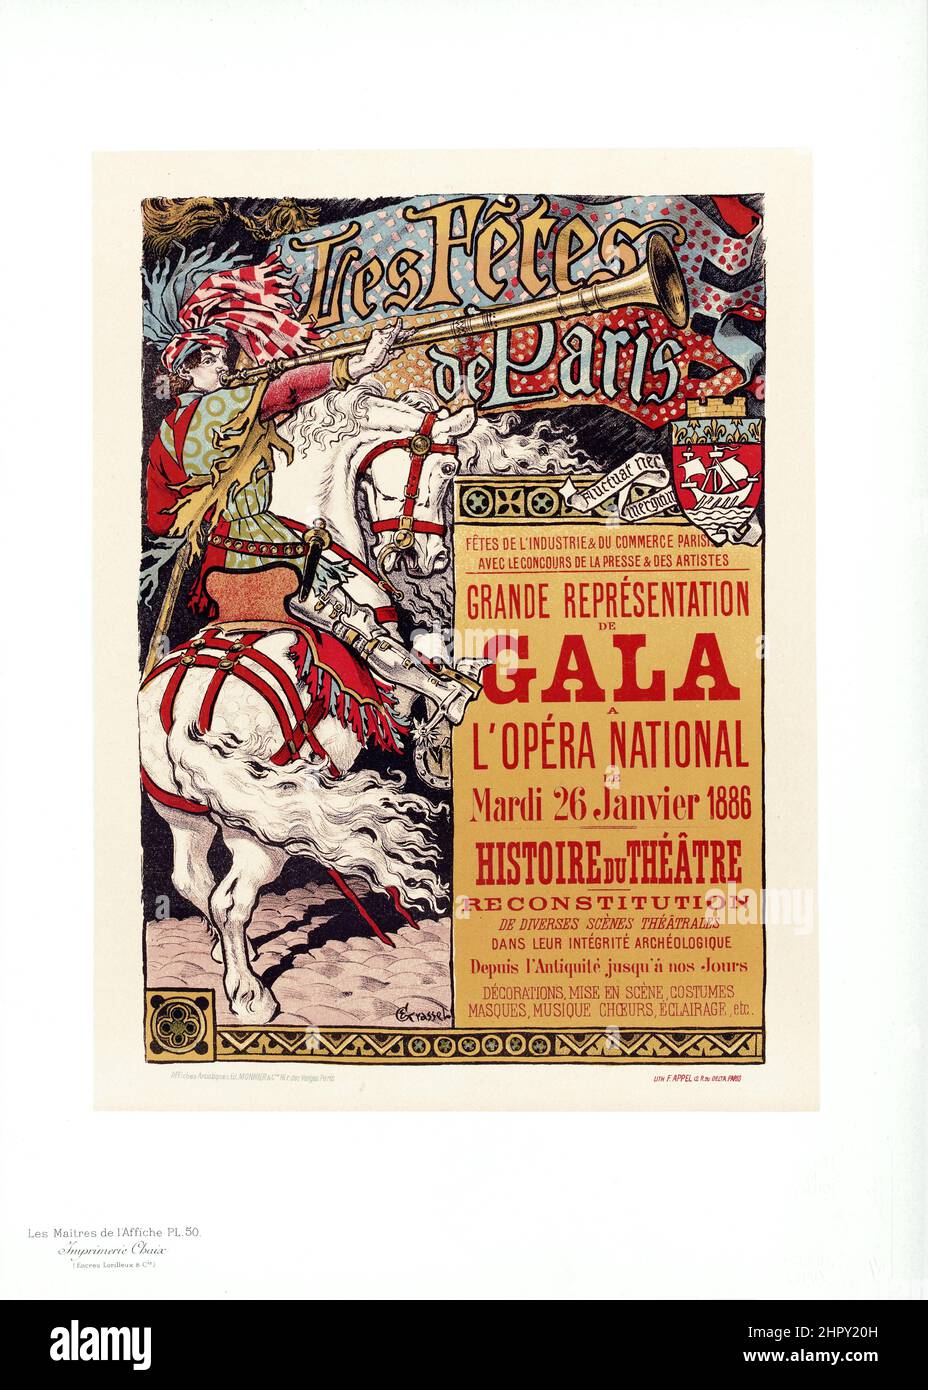 Maitres de l'affiche Vol 2 - Plate 50 - Eugene Grasse - Grande rappresentazione de Gala l'Opera National. Tres Fetes de Paris. 1886. Foto Stock